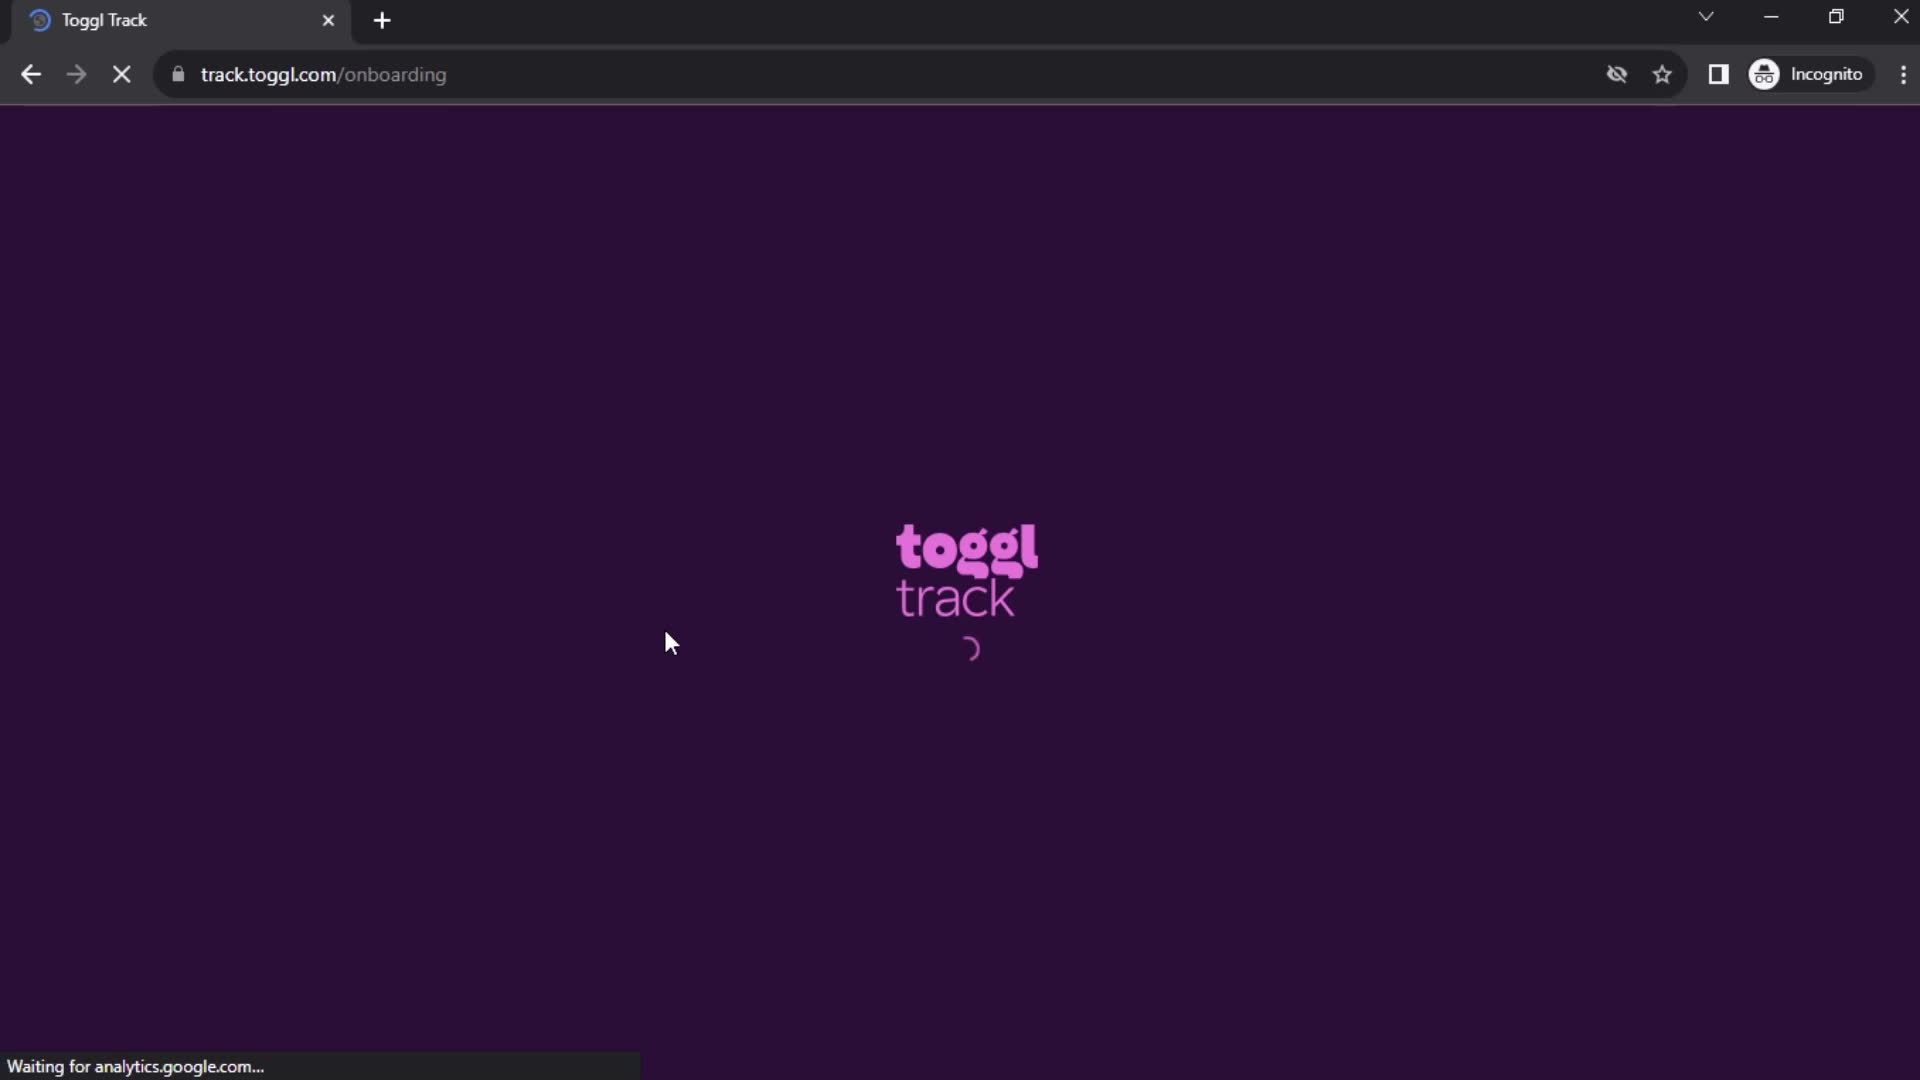 Toggl Track loading screenshot